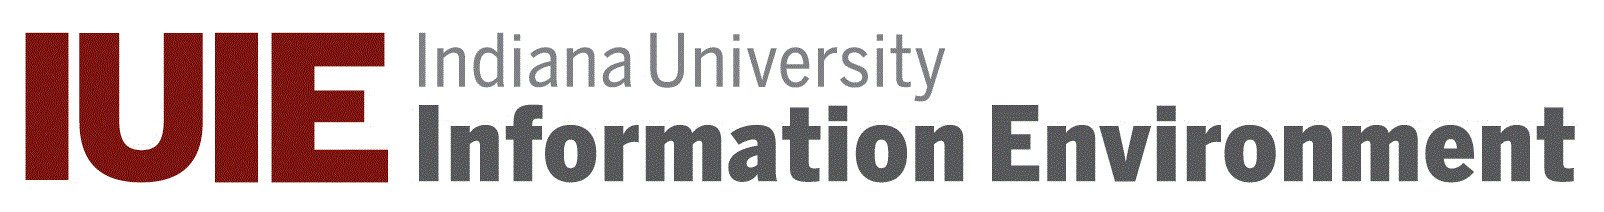 Indiana University Information Environment logo